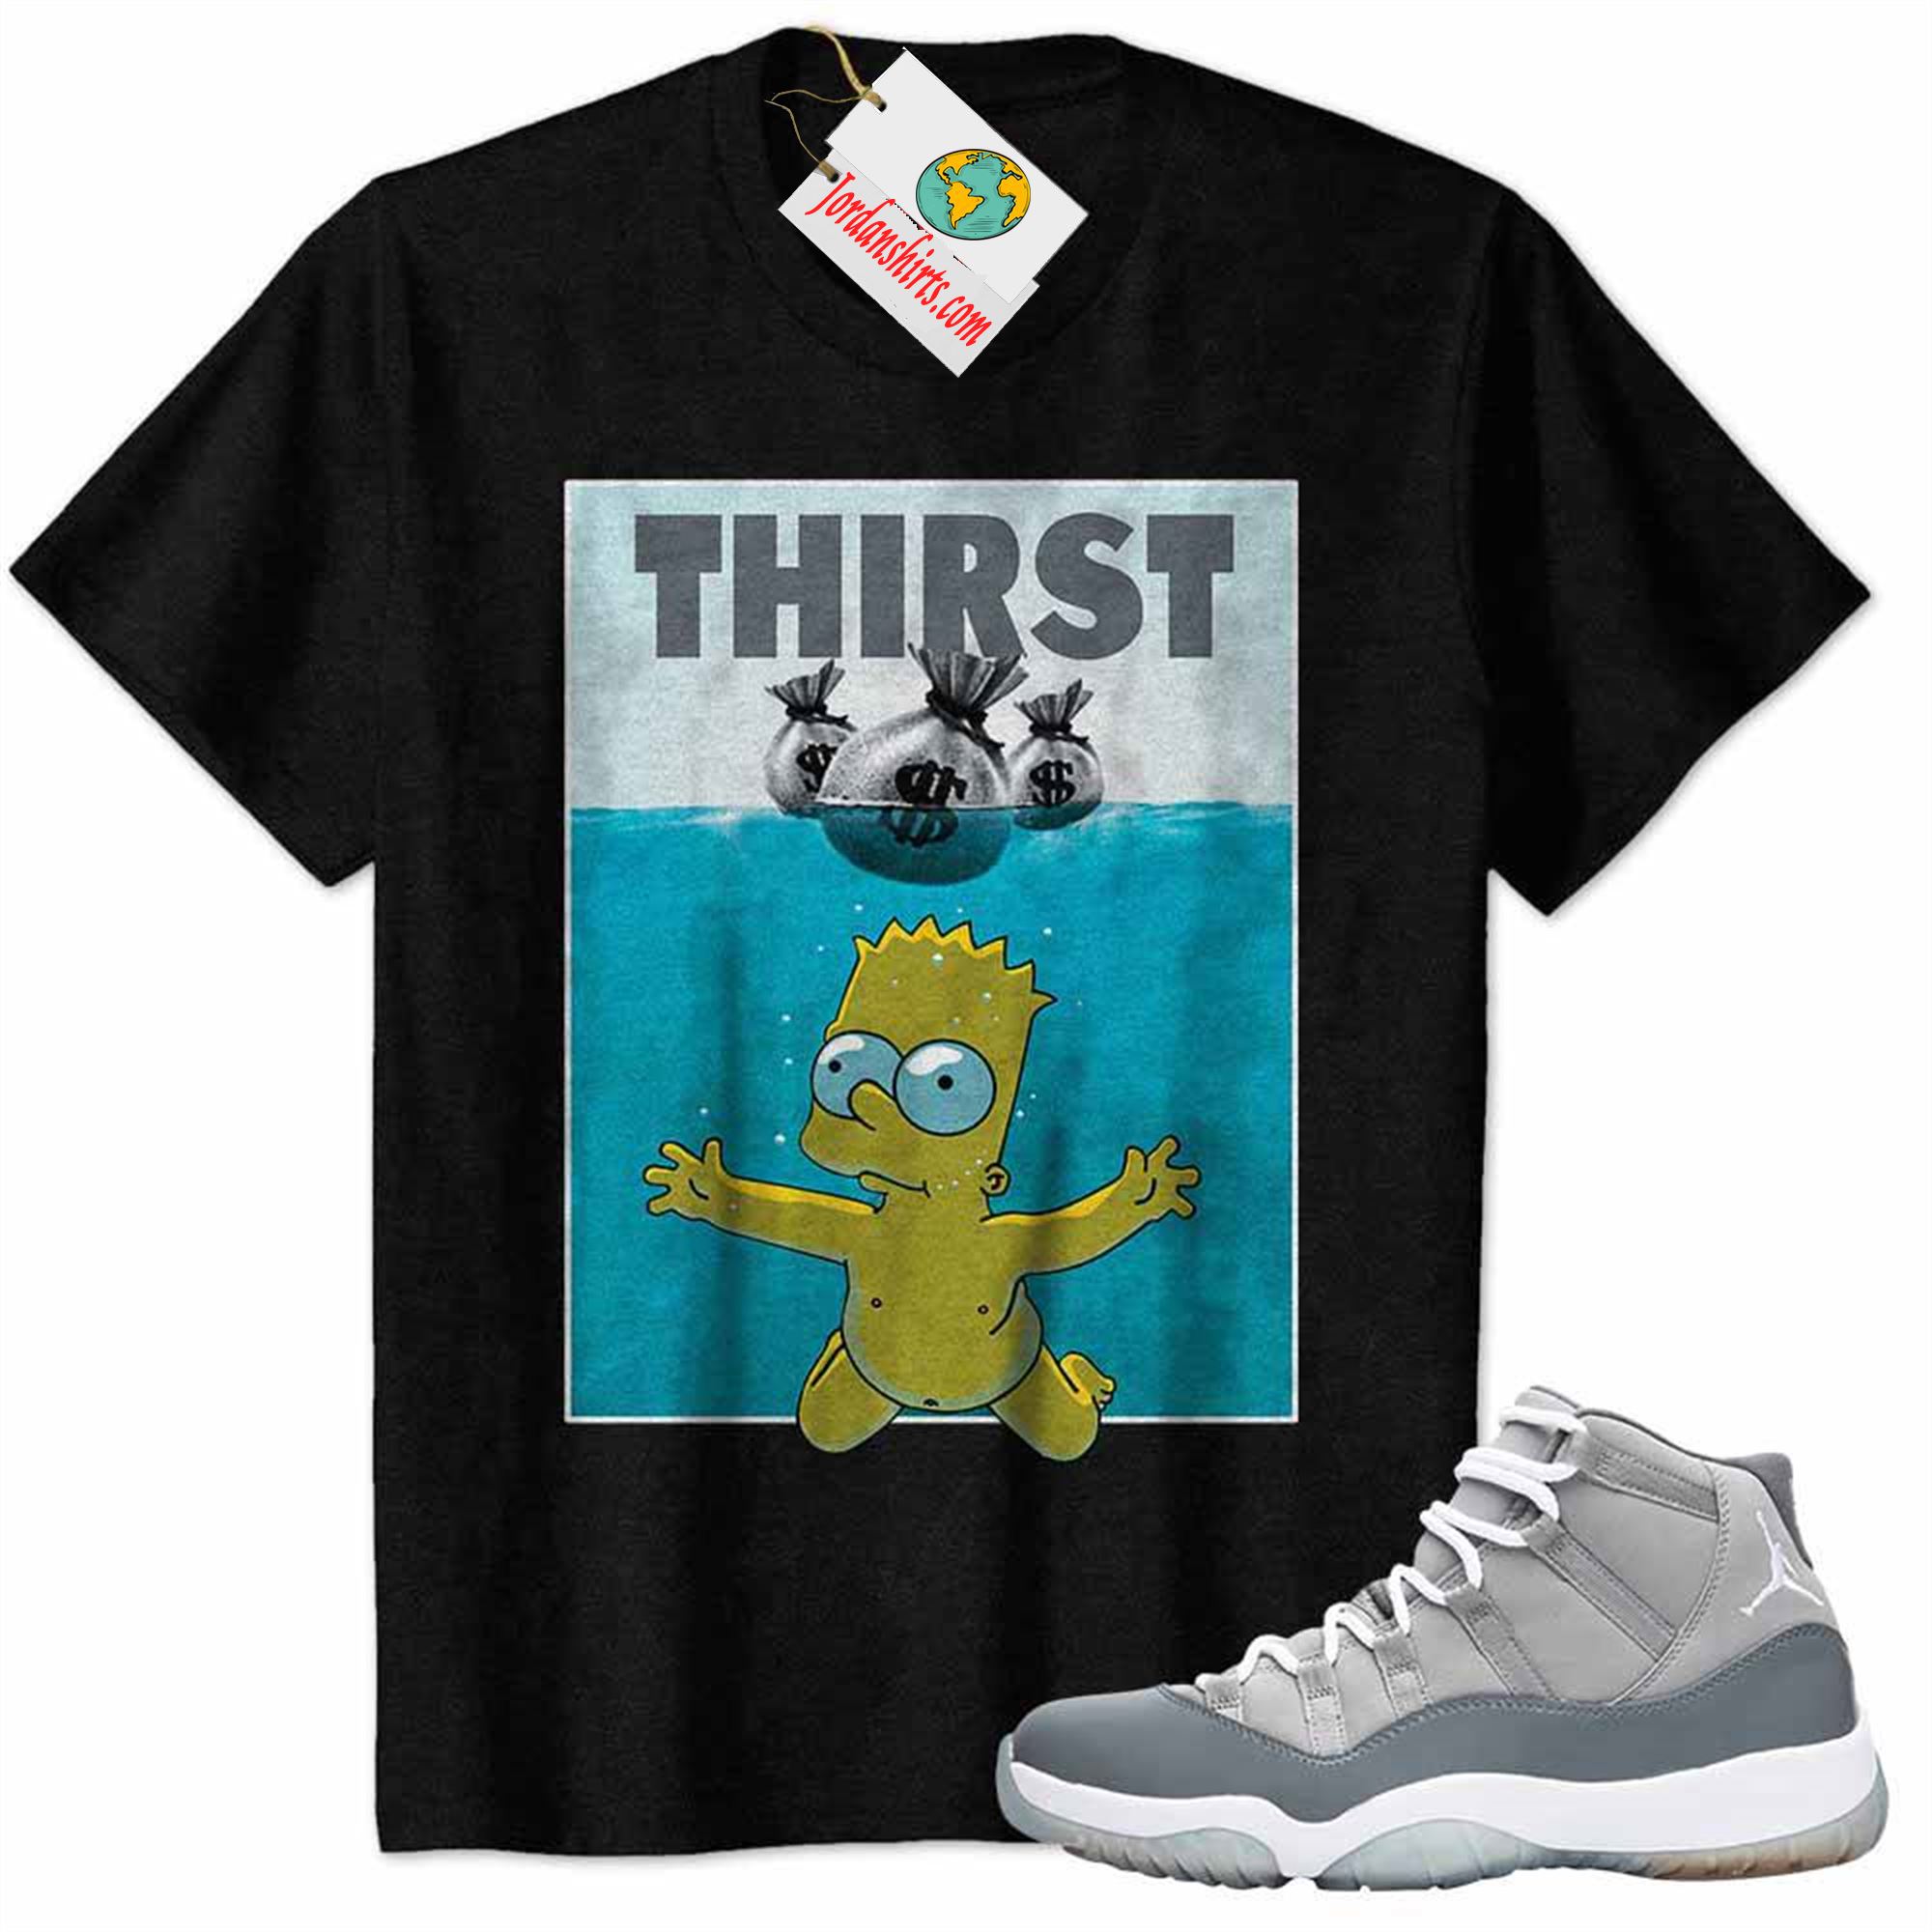 Jordan 11 Shirt, Bart Simpson Jaw Thirst Money Bag Black Air Jordan 11 Cool Grey 11s Full Size Up To 5xl